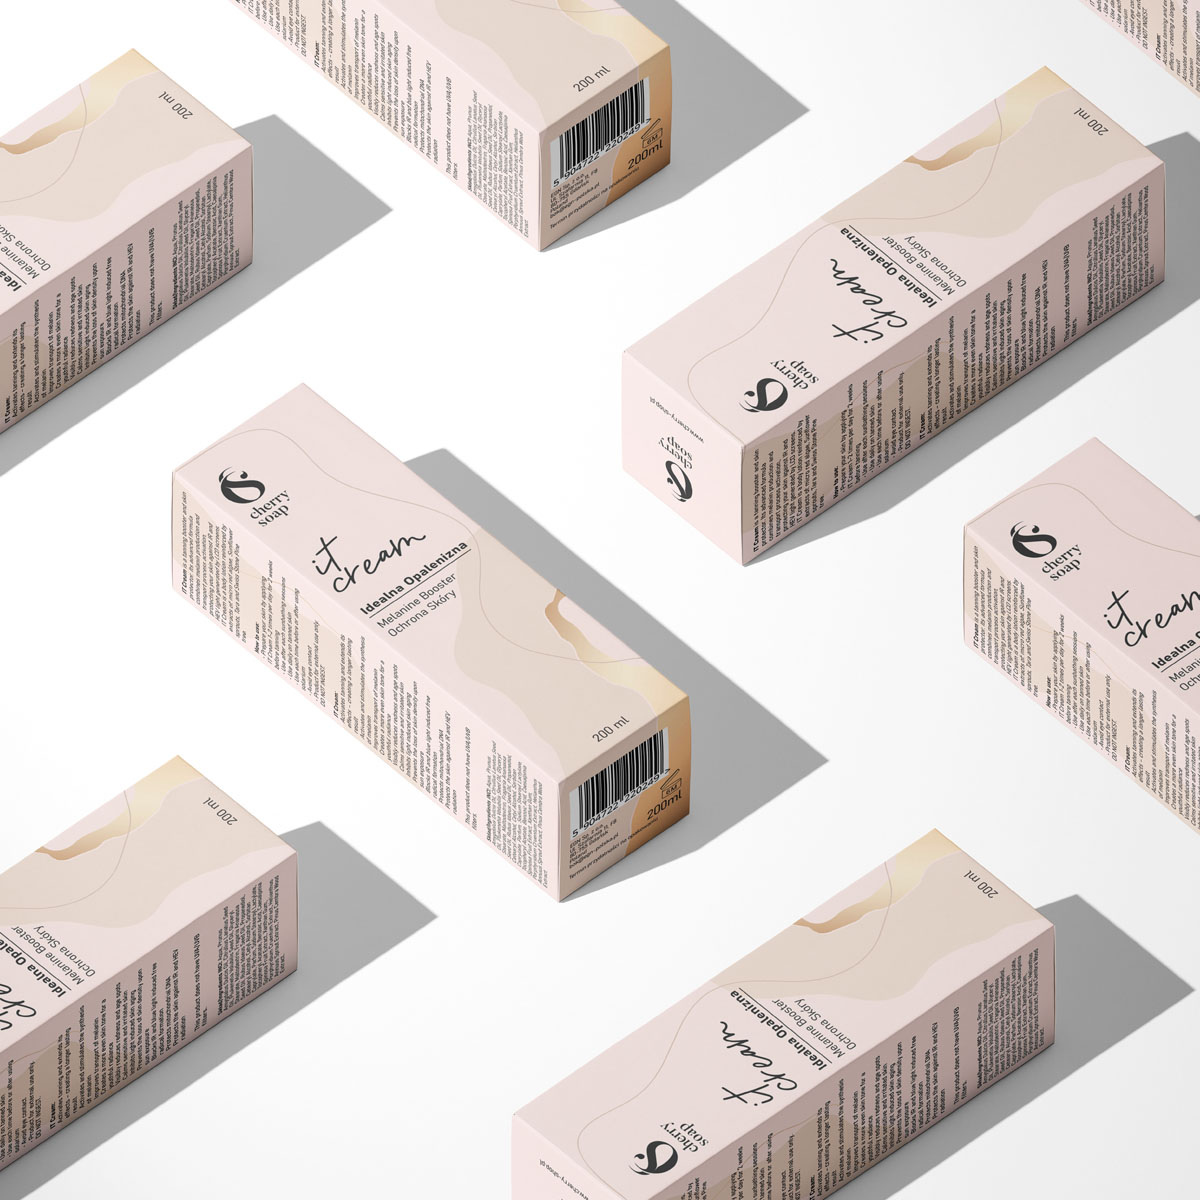 Projekt Face cream packaging design